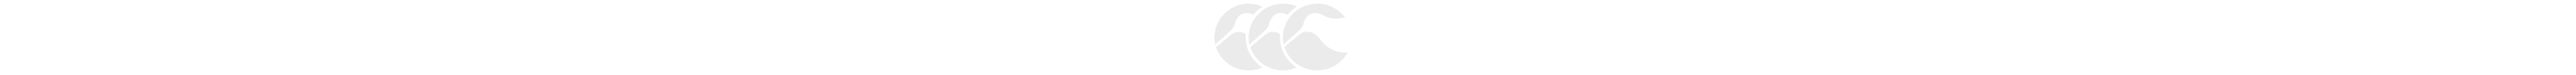 CCC logo Grey Watermark